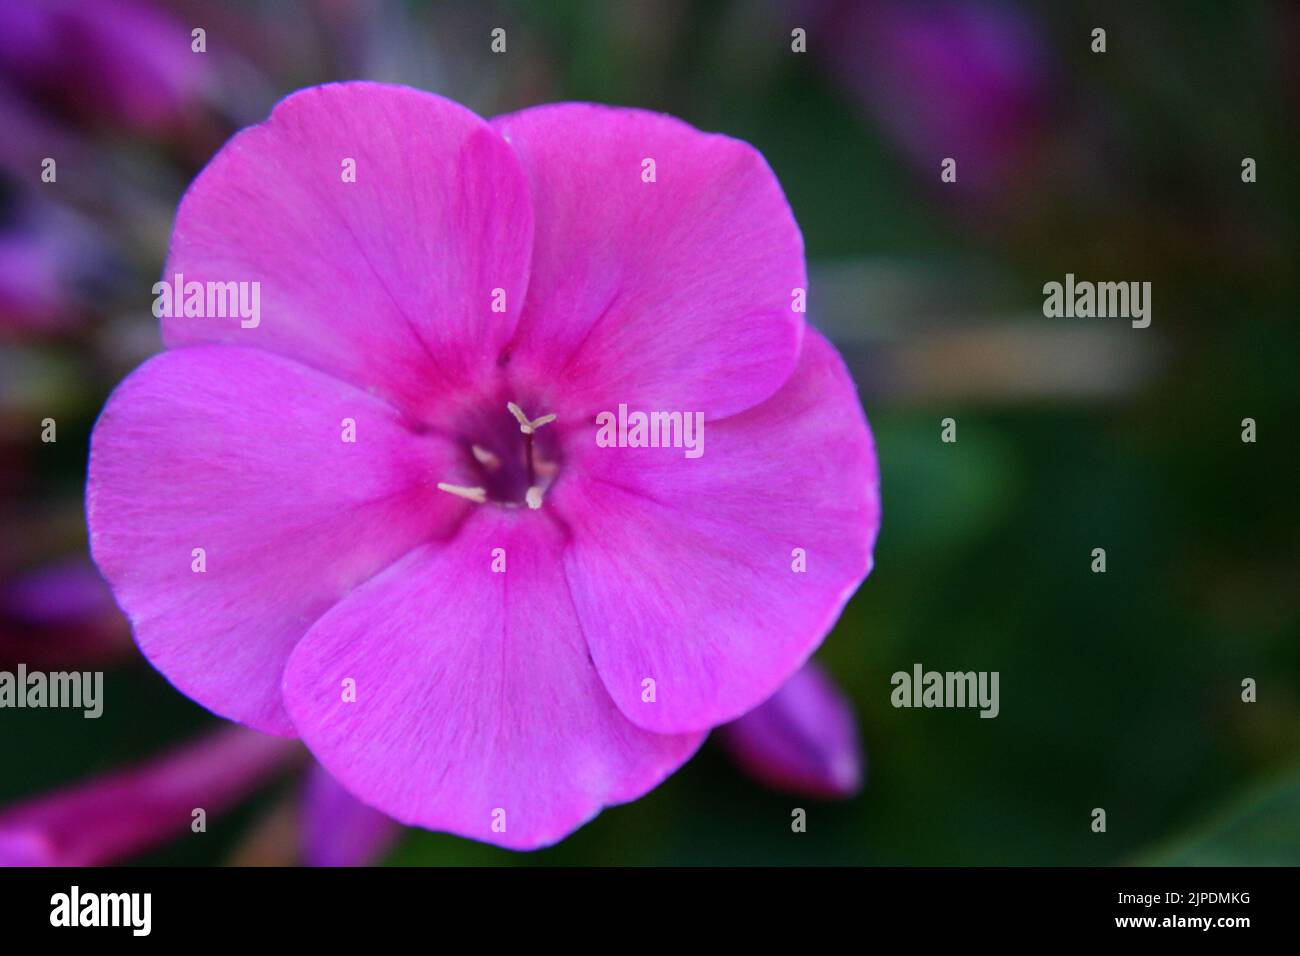 Bright pink fall phlox or garden phlox or perennial phlox  (Phlox paniculata) flower close up Stock Photo